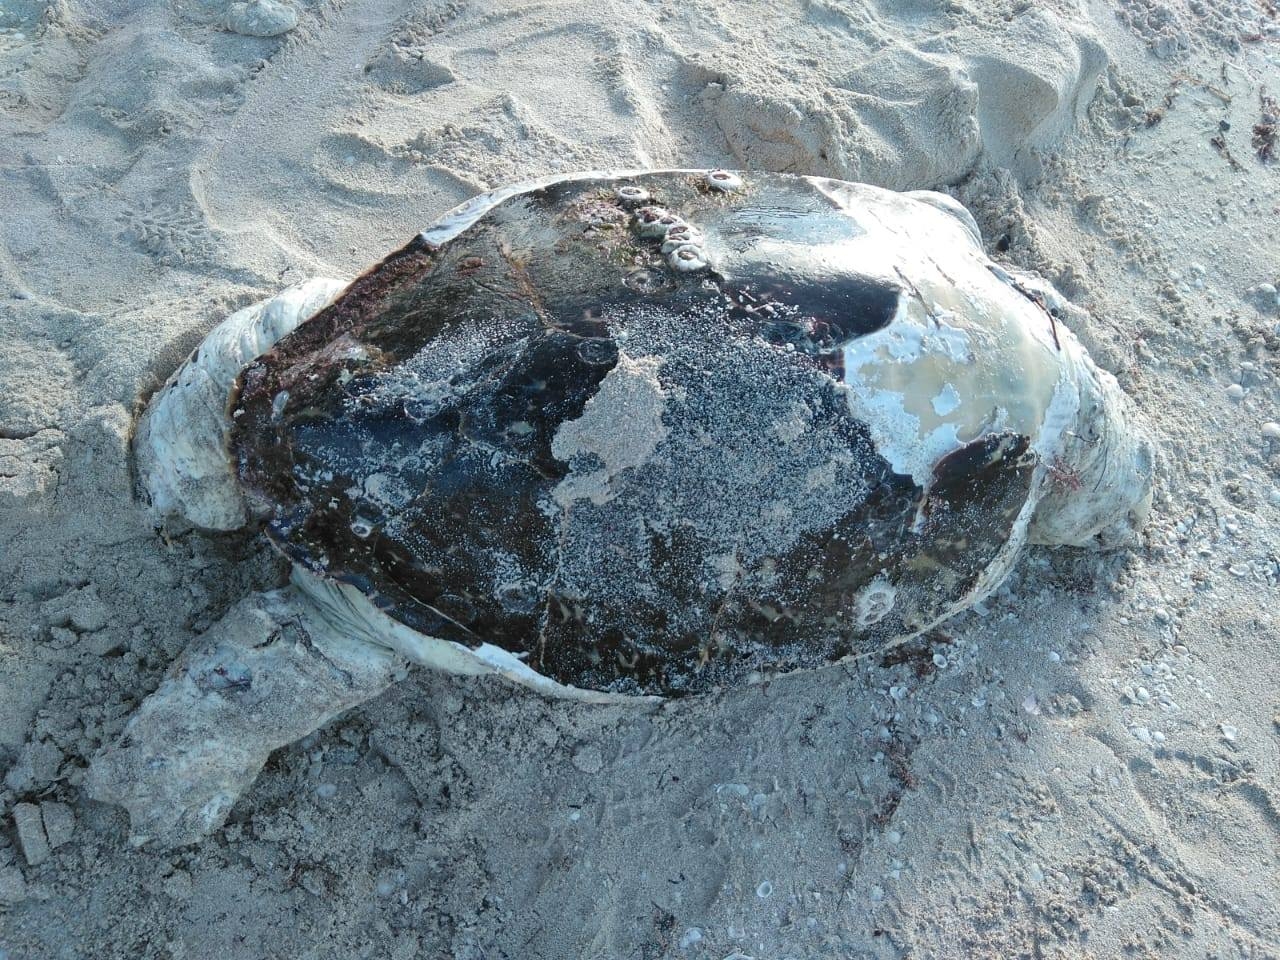 Aparece otra tortuga muerta en Progreso; van tres esta semana